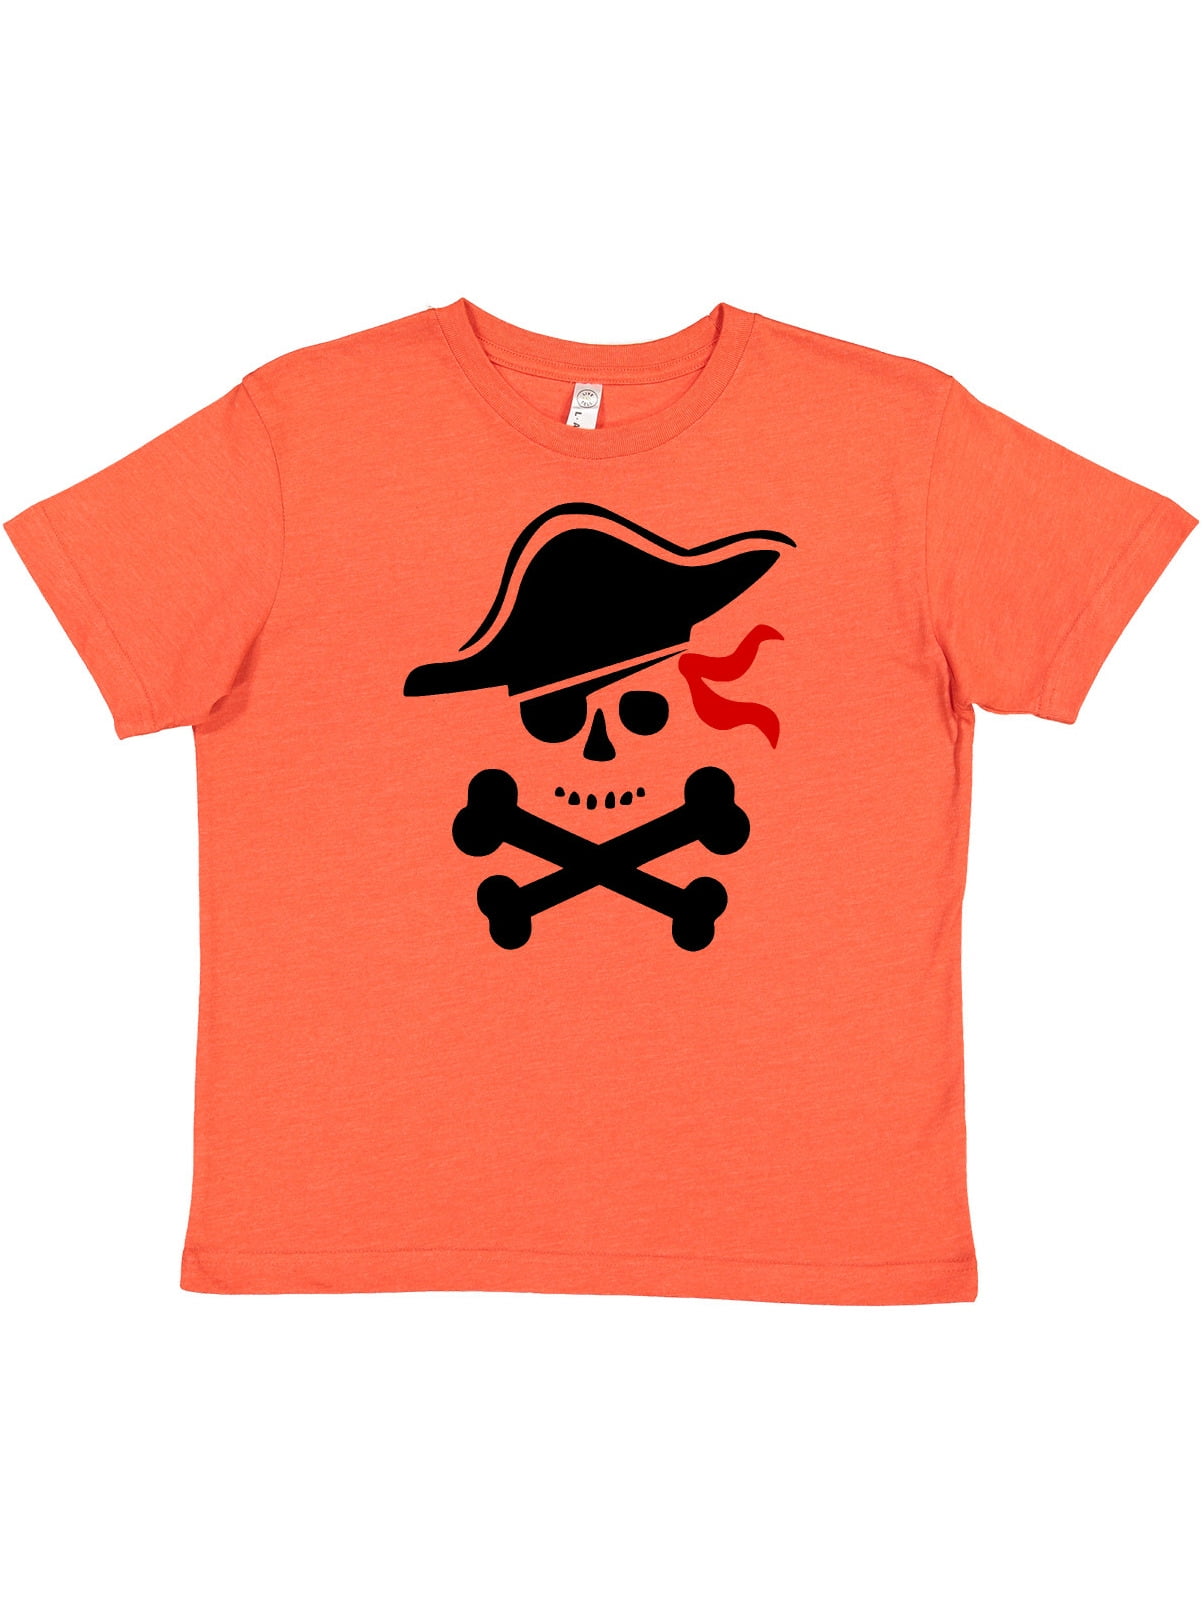 Kids Pirate Girl Skull & Bones Youth Graphic Tee Shirt Size XS-L Black T-shirt 